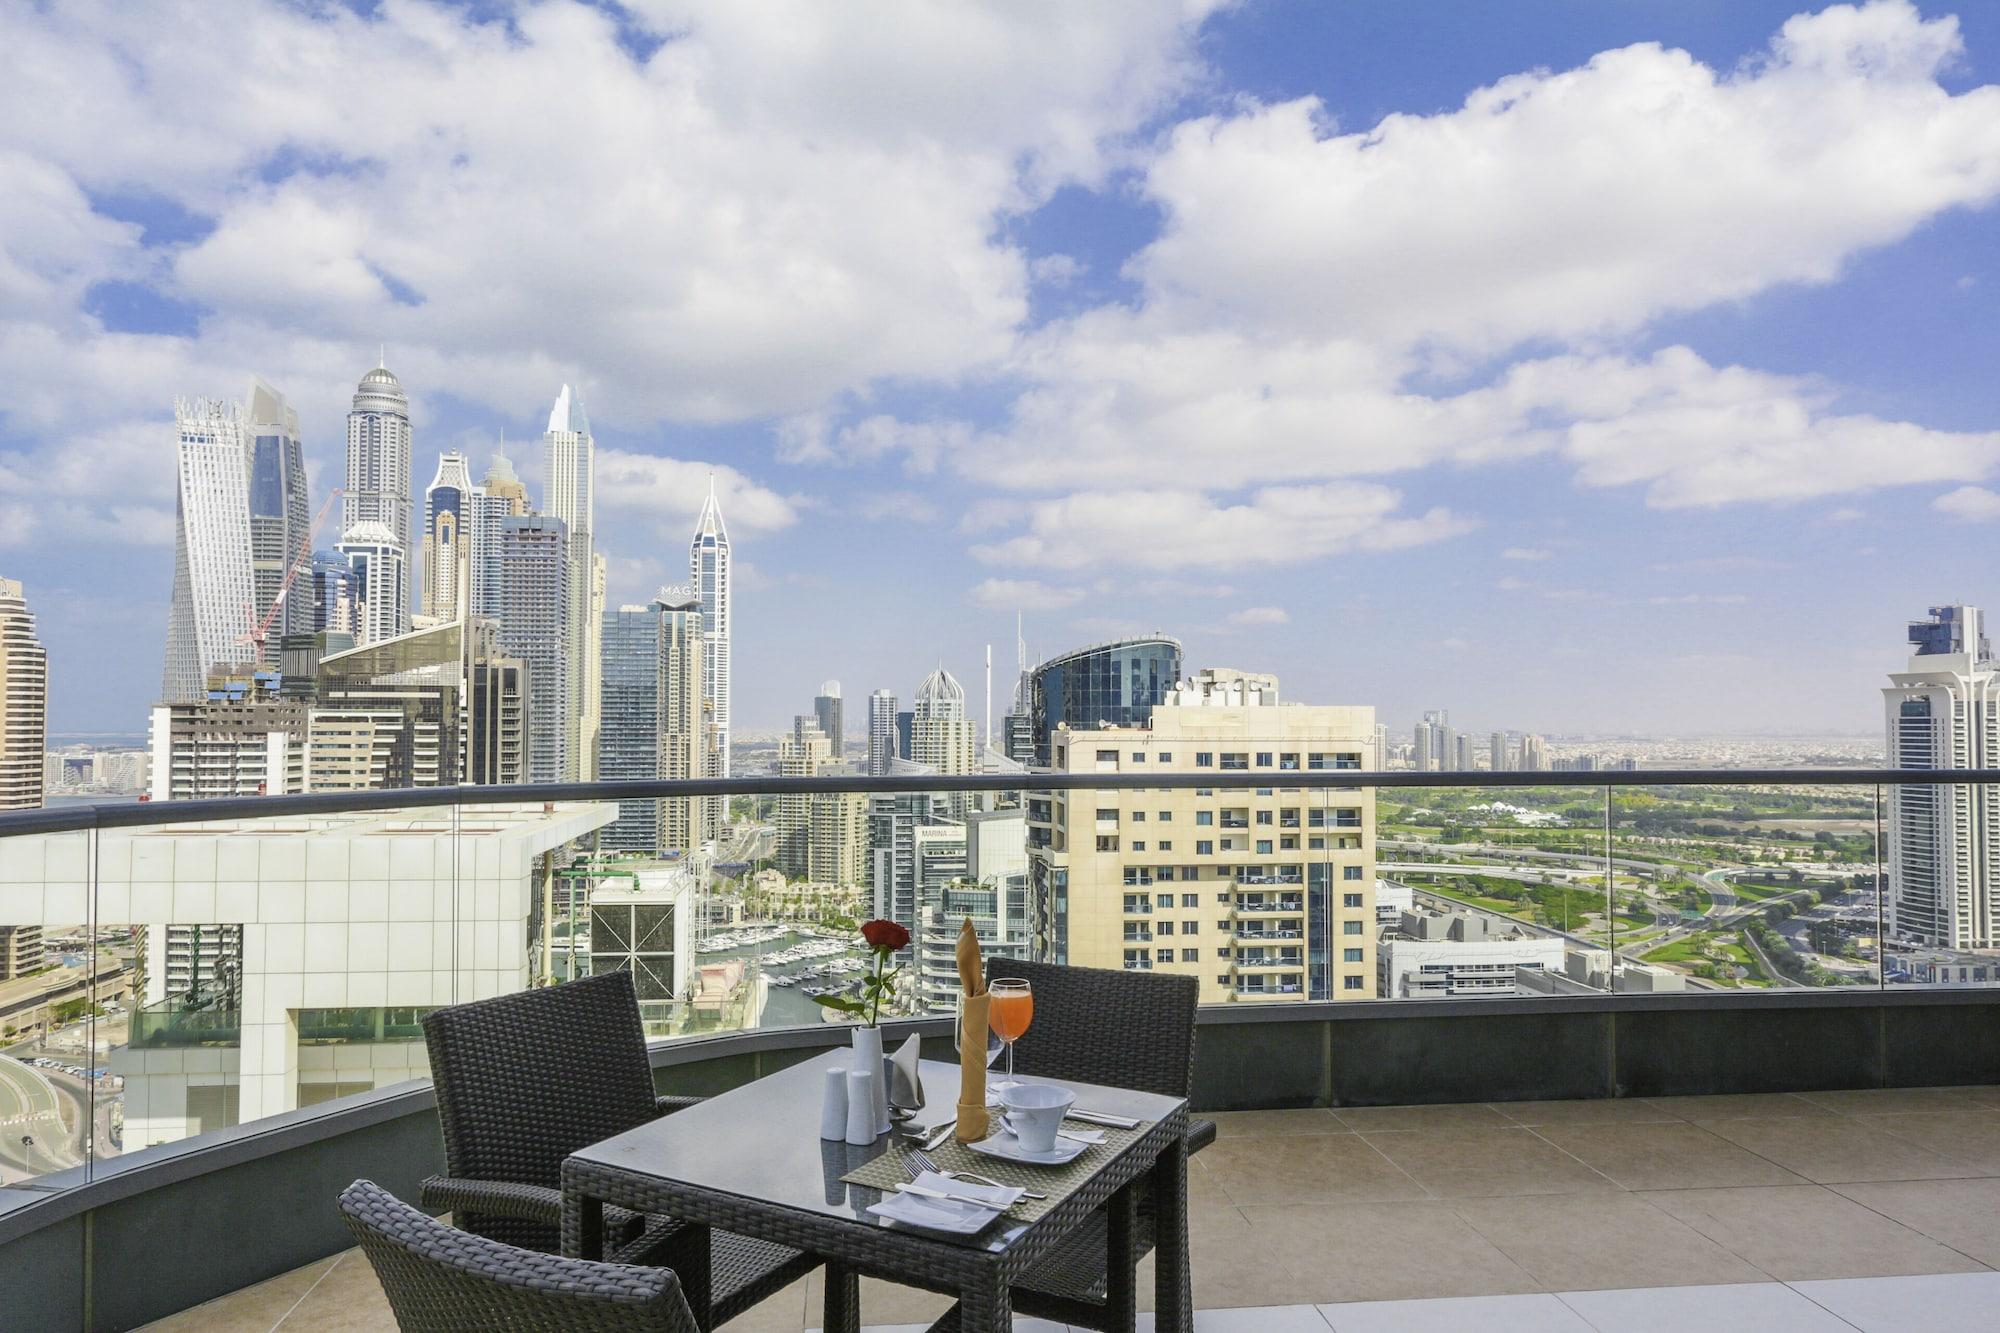 City Premiere Marina Hotel Apartments Dubai Exterior photo